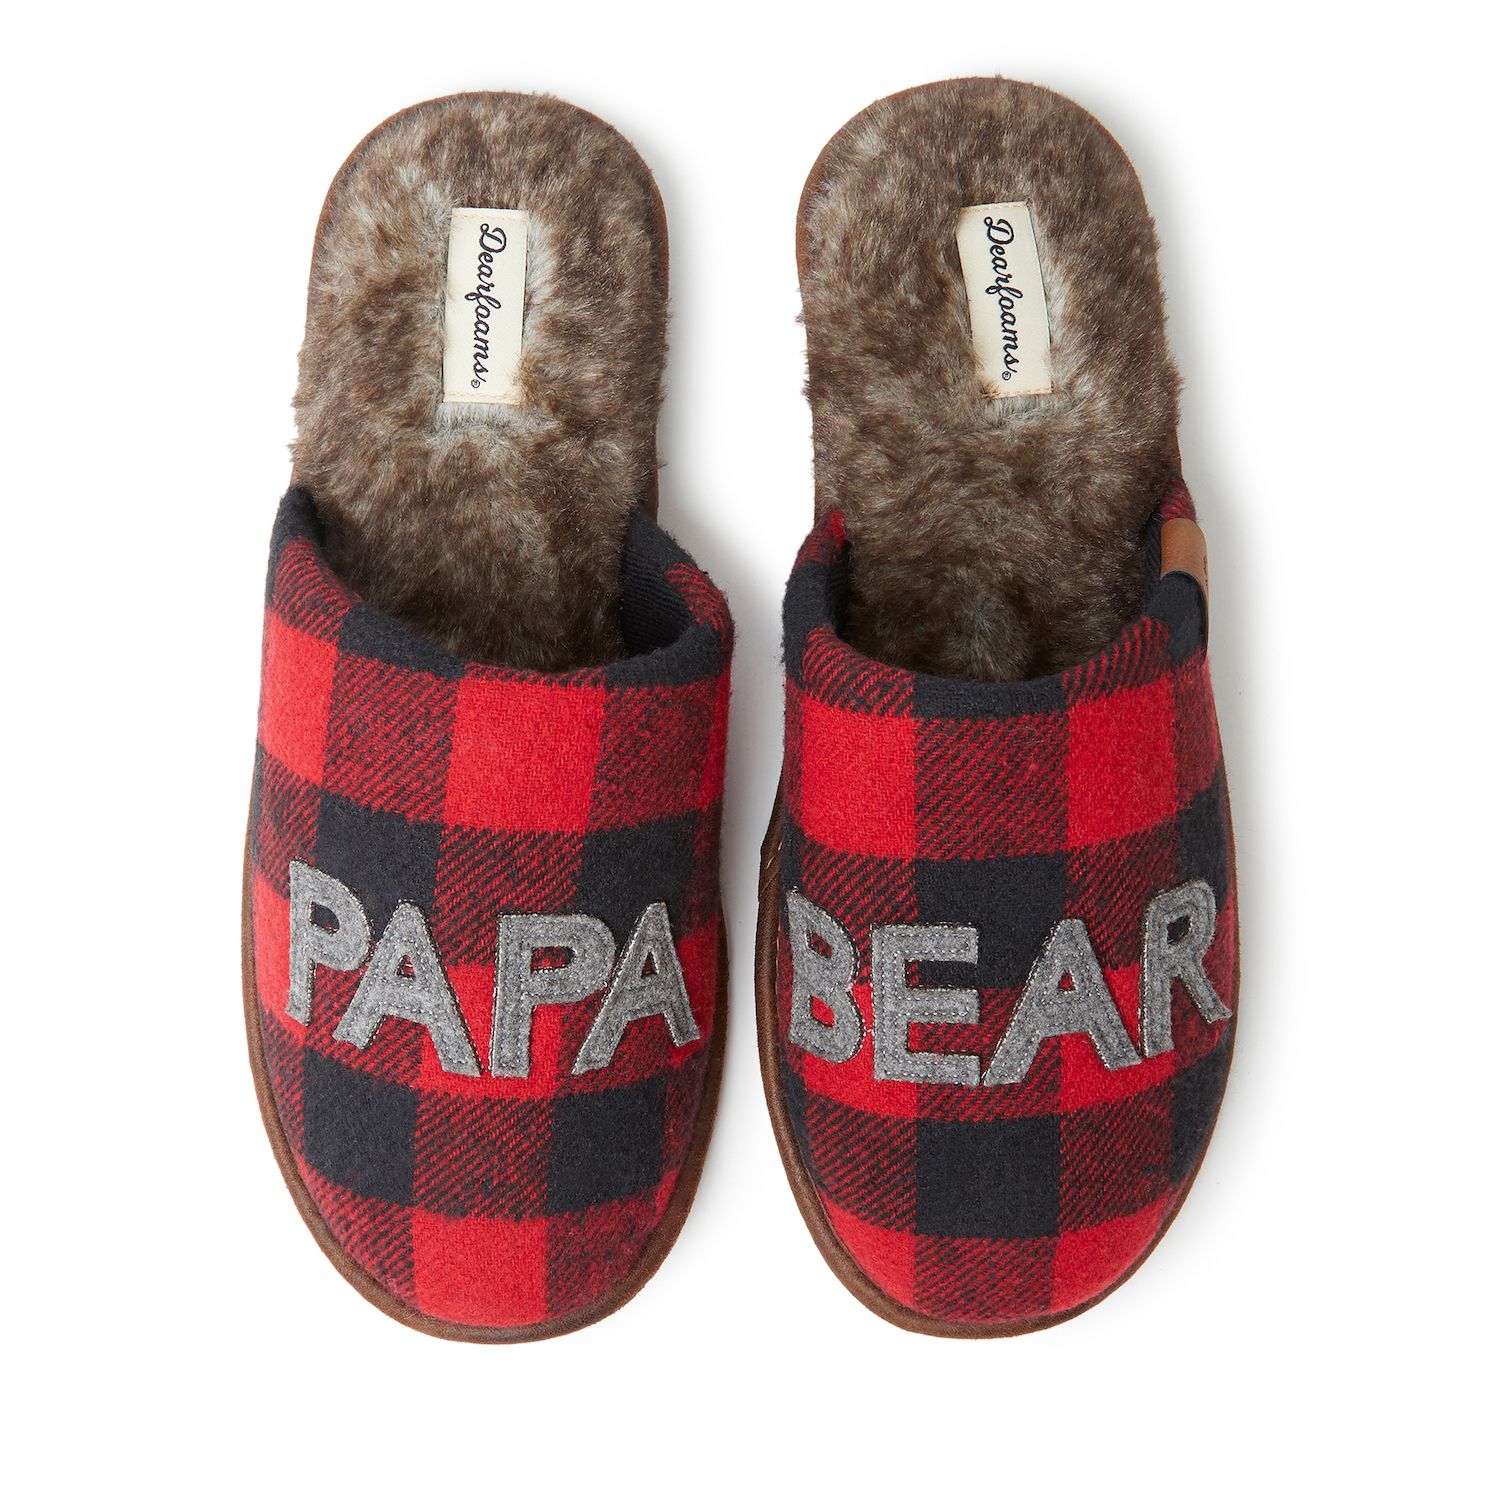 mens papa bear slippers